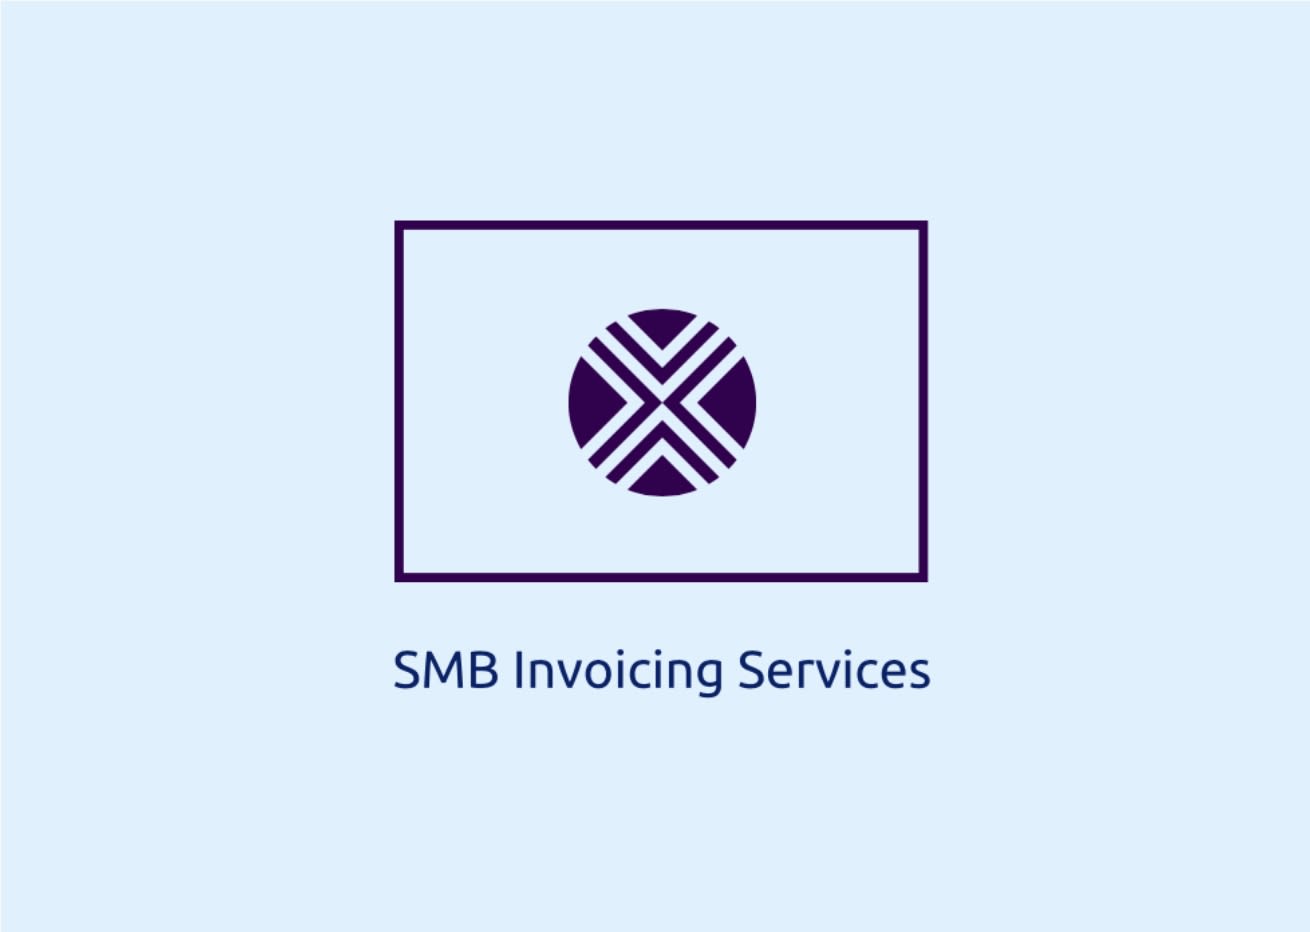 SMB Invoicing Services